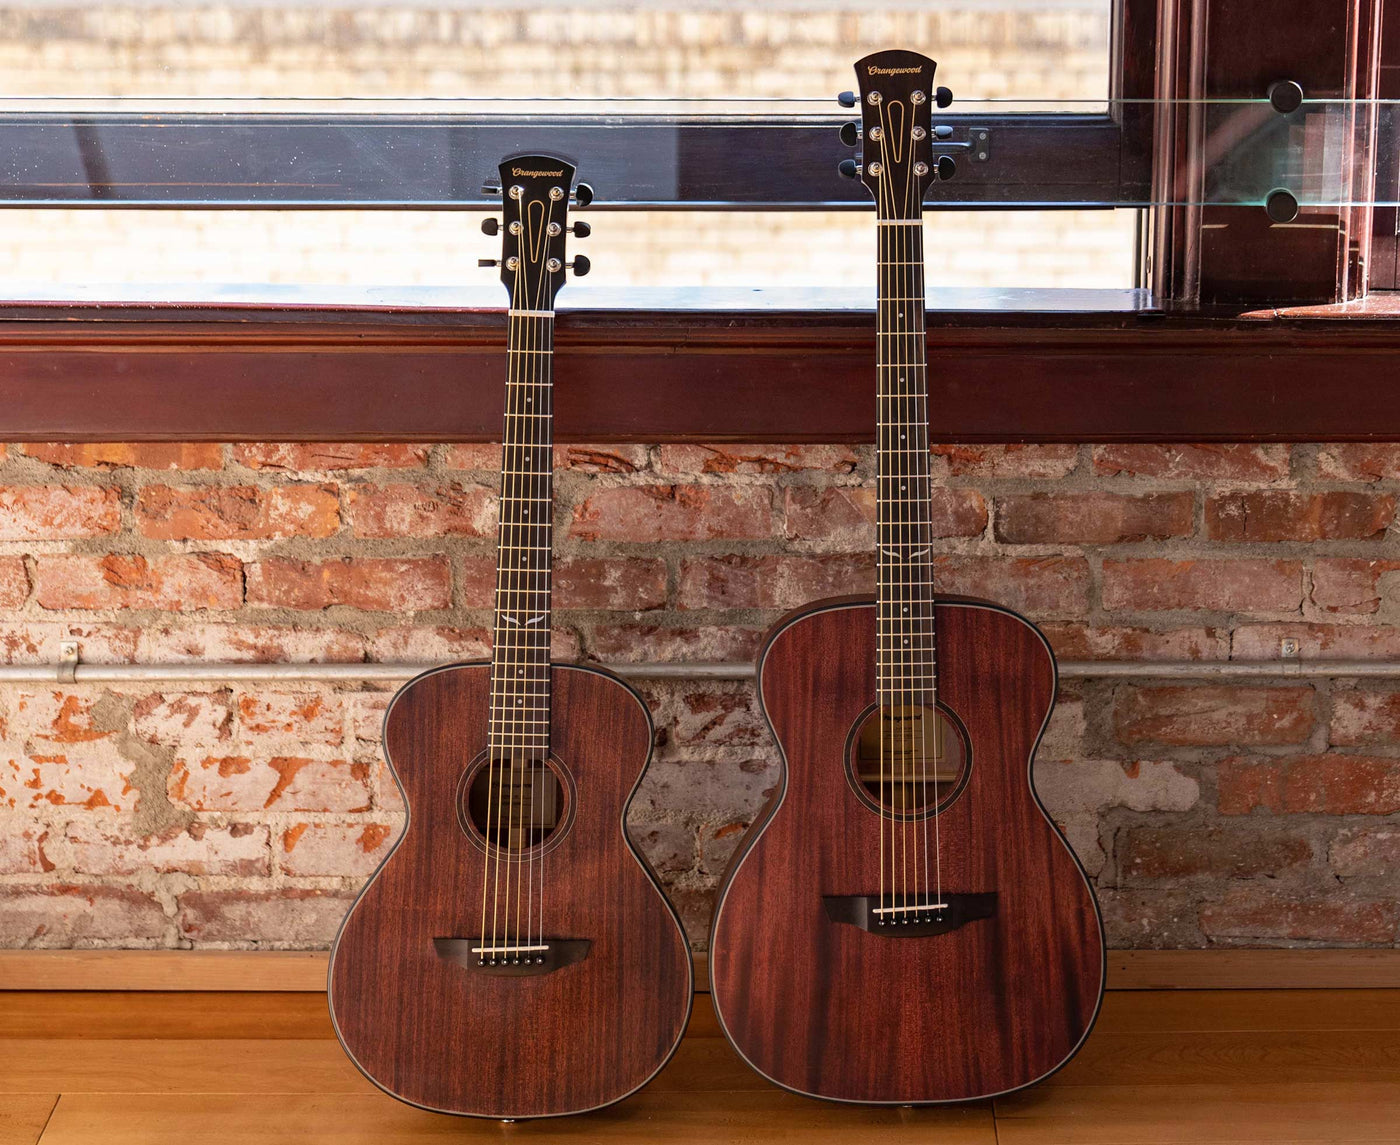 Oliver jr. mahogany guitar and oliver mahogany guitar against a brick wall